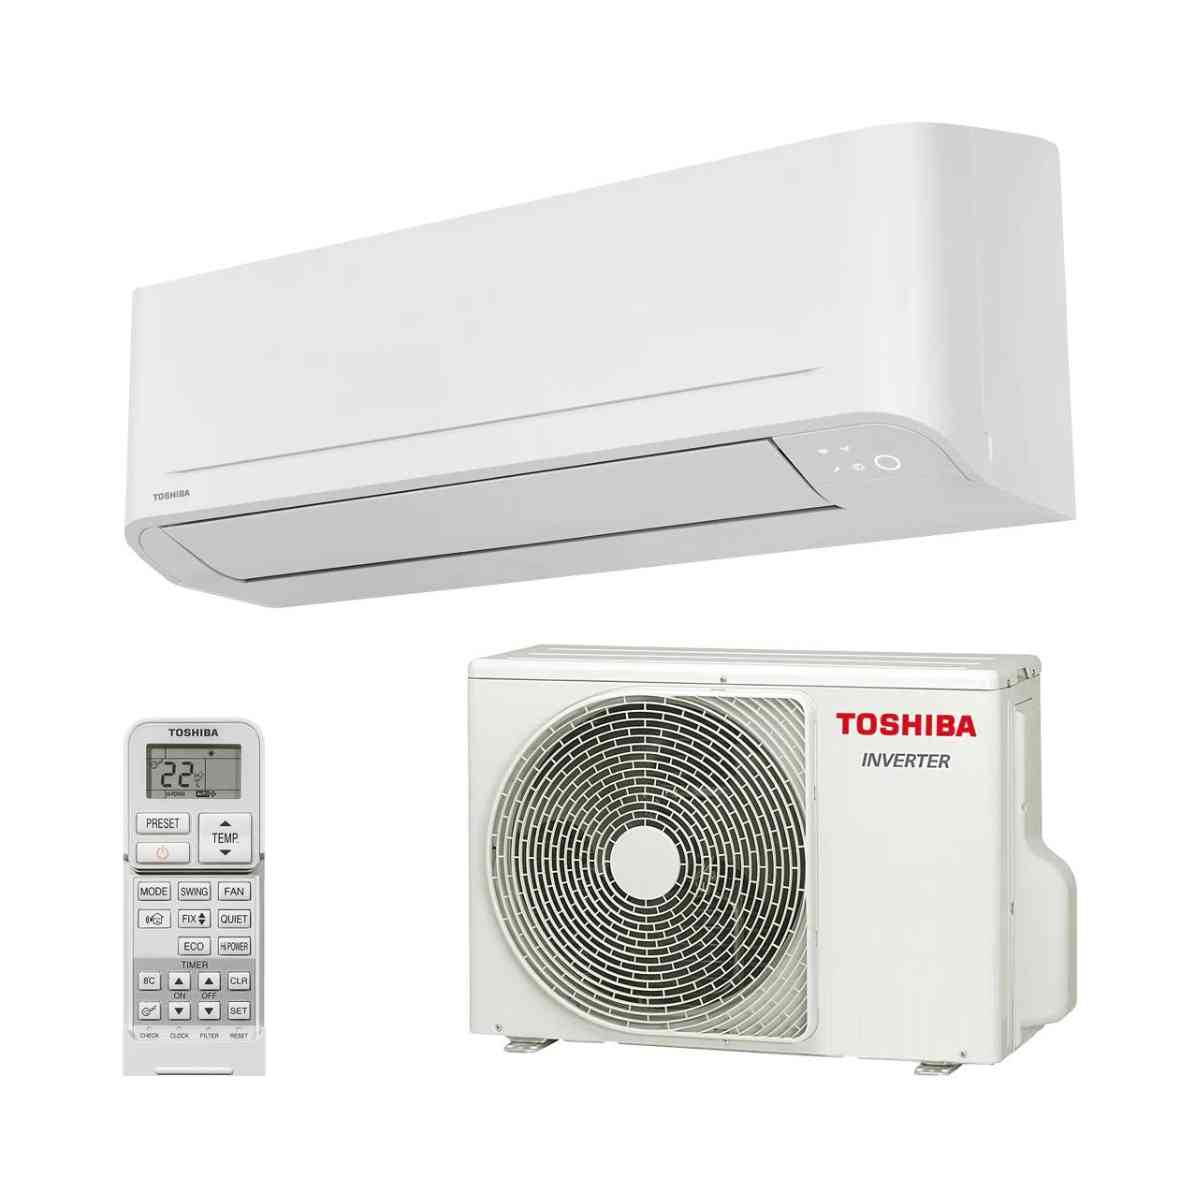 Ar condicionado fixo 1x1 Toshiba Seiya+ 18 17050 BTU com referência SEIYA+ 18 da marca TOSHIBA